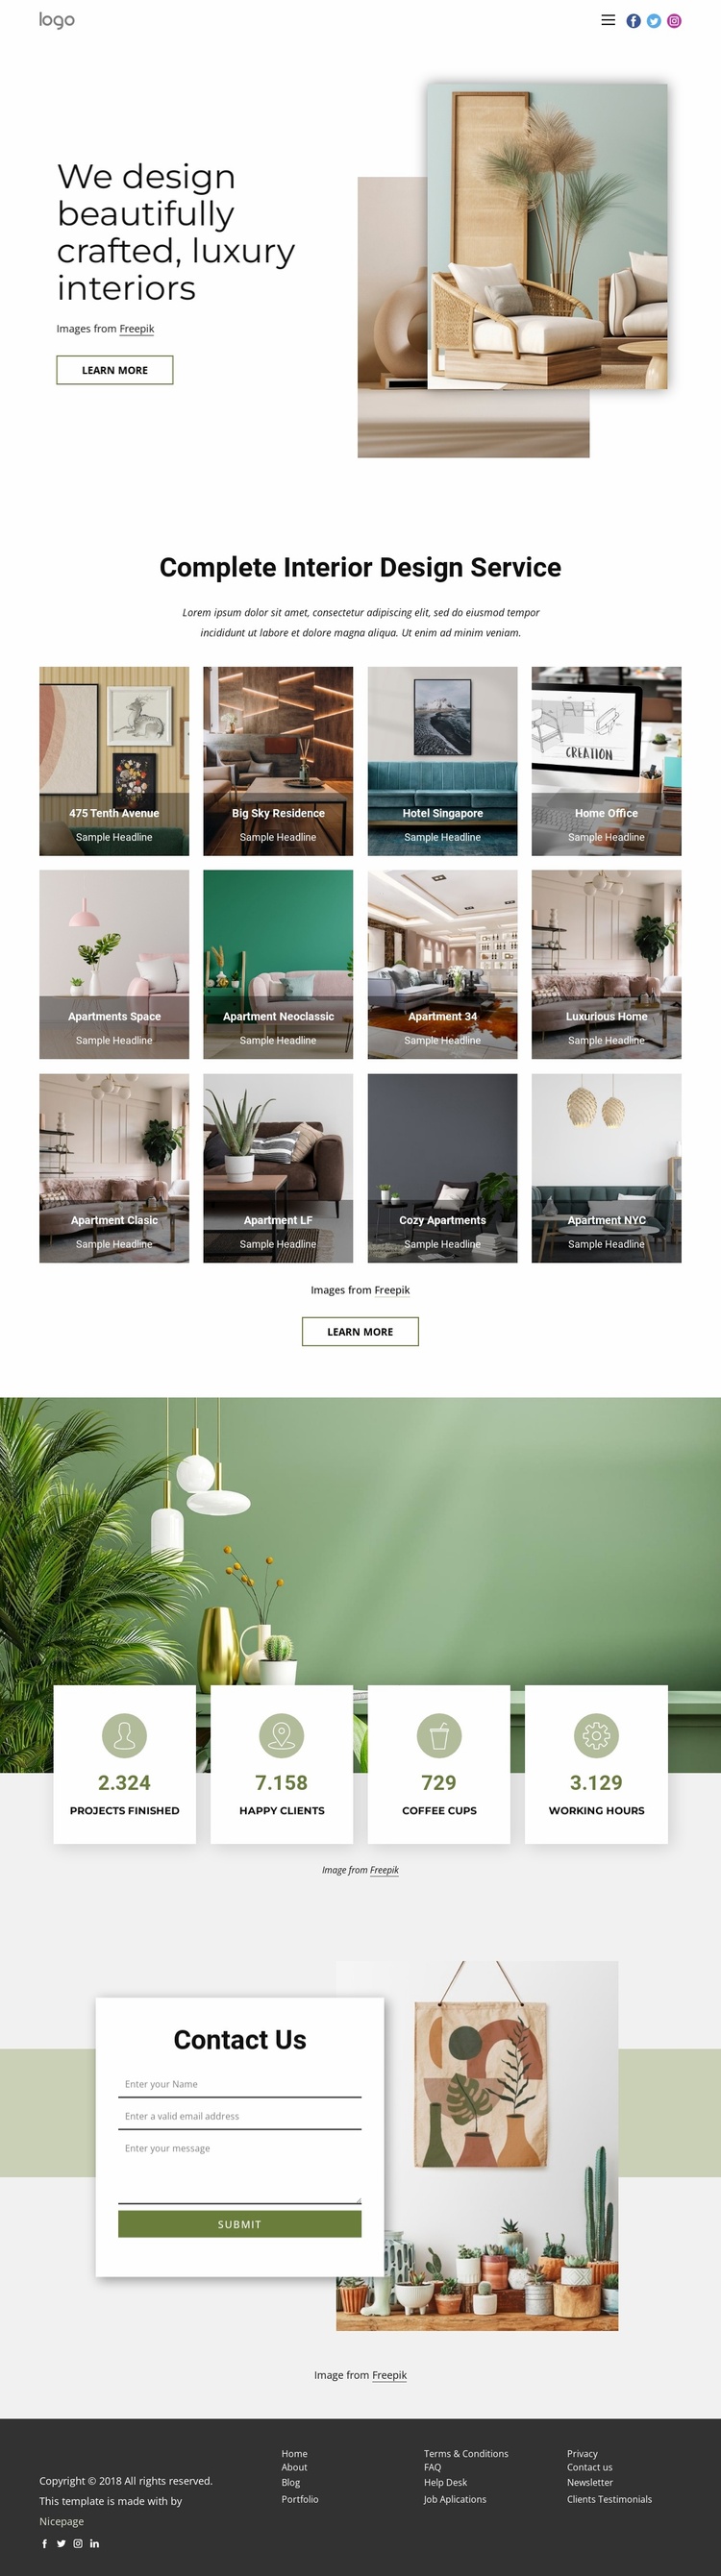 We design luxury interiors Website Template